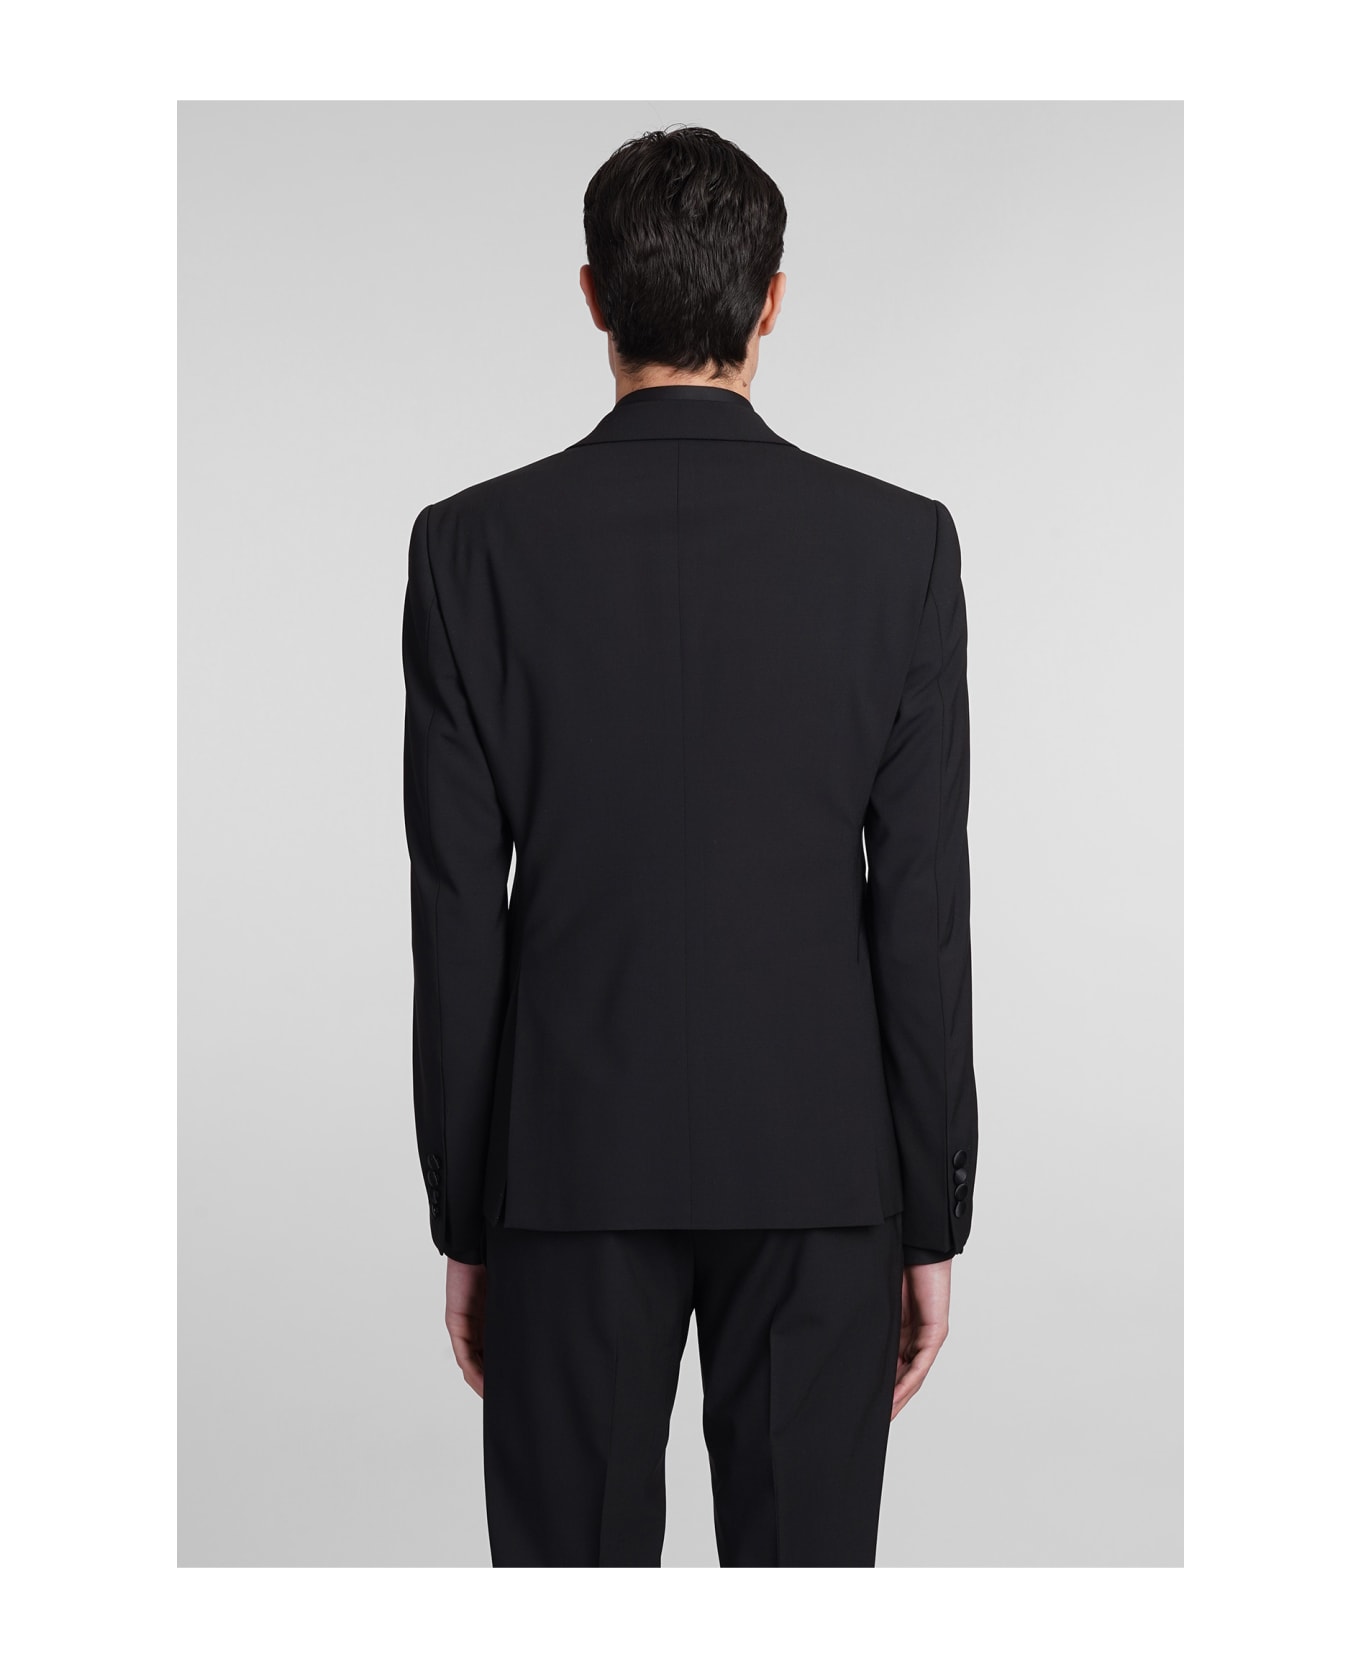 Emporio Armani Suit - BLACK